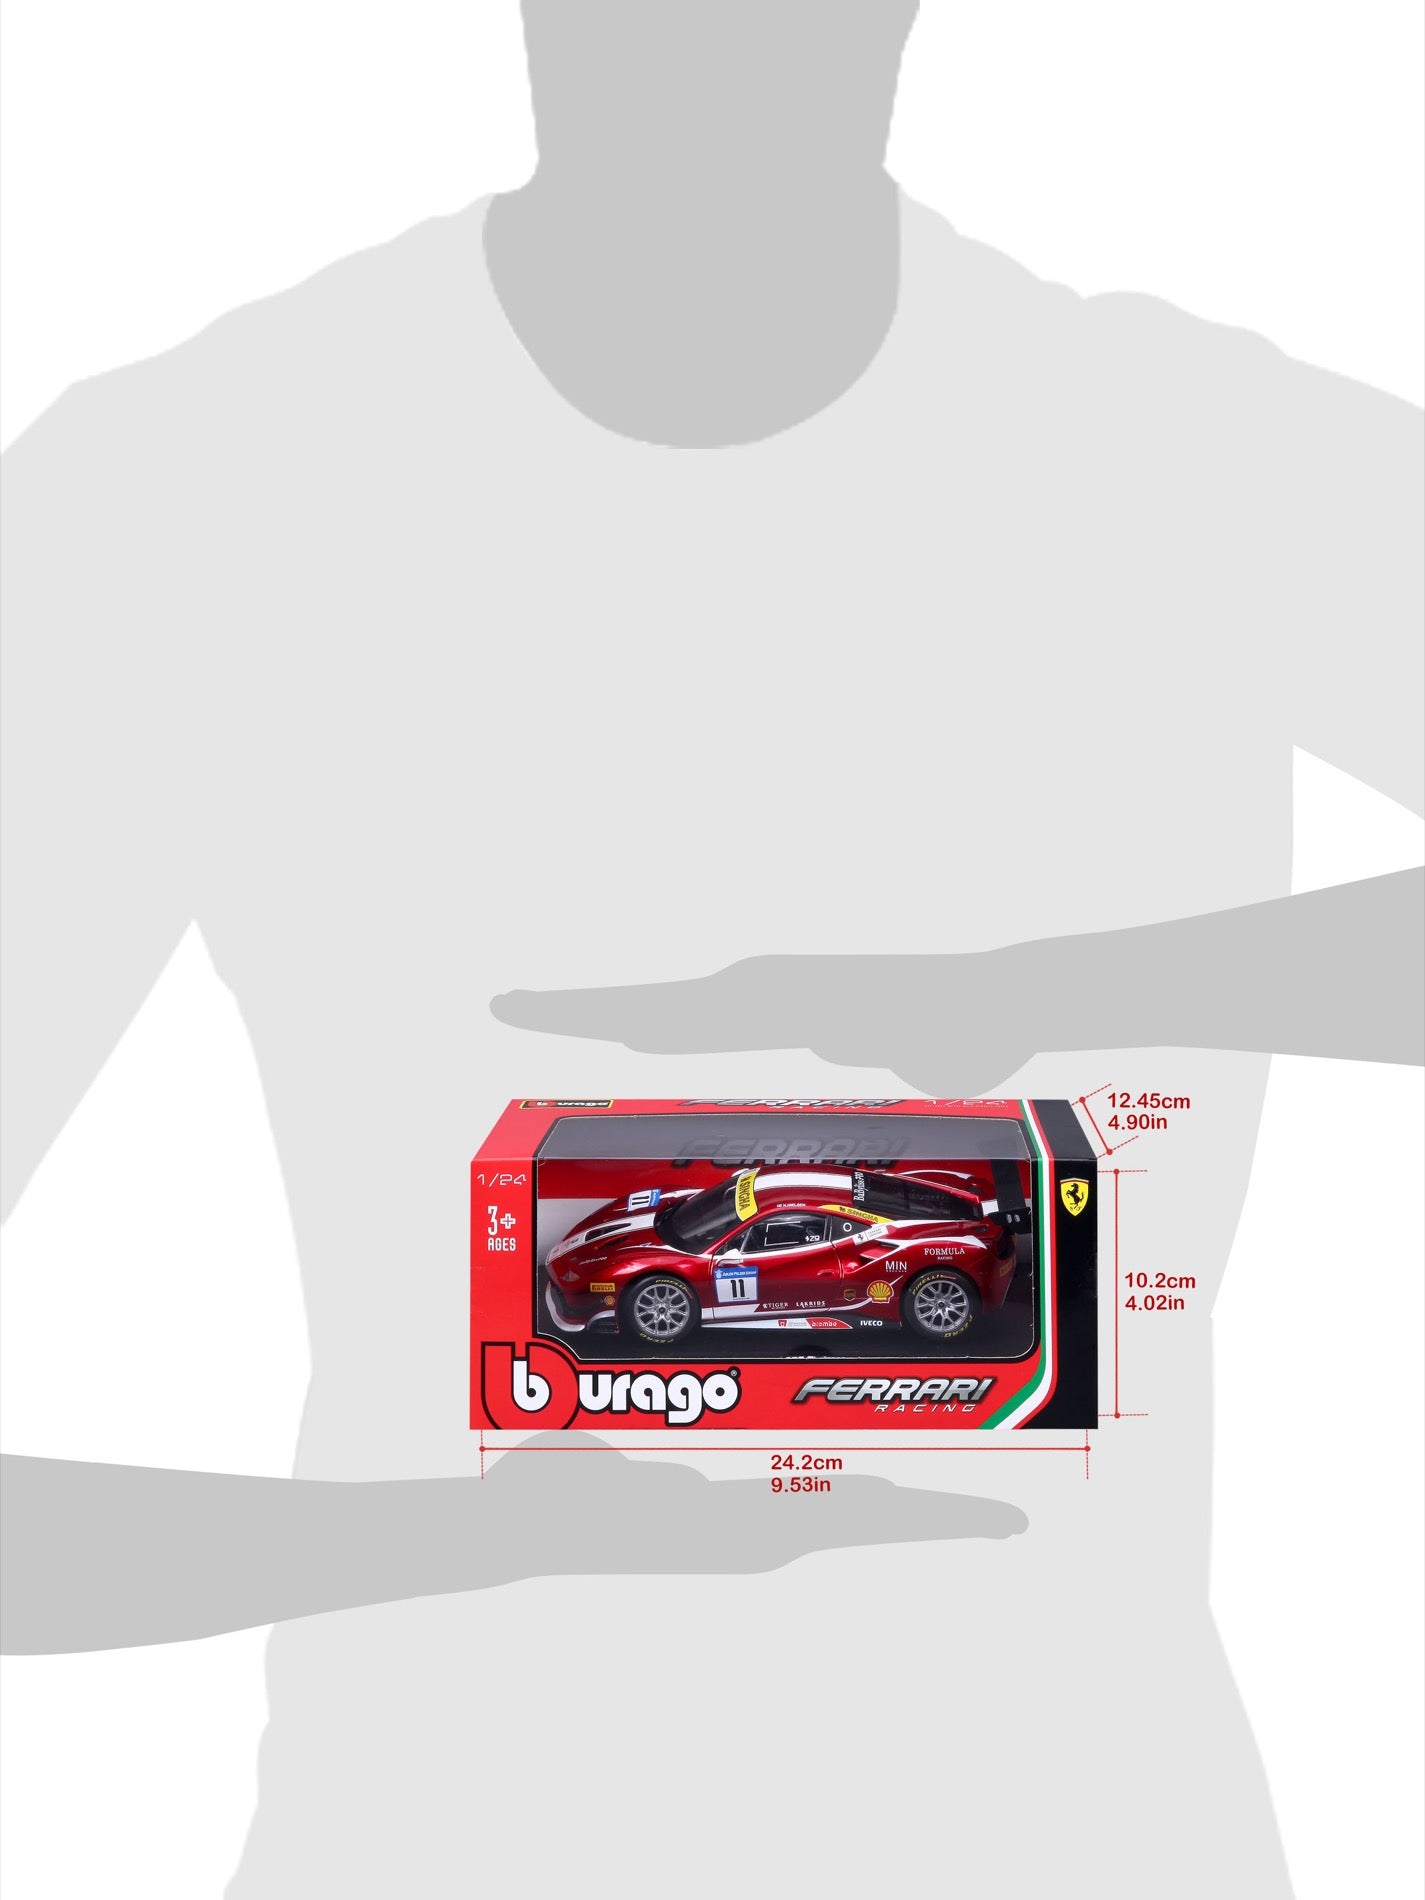 18-26308 - Bburago - 1:24 - Ferrari   Racing -  488 Challenge (Formula Raci